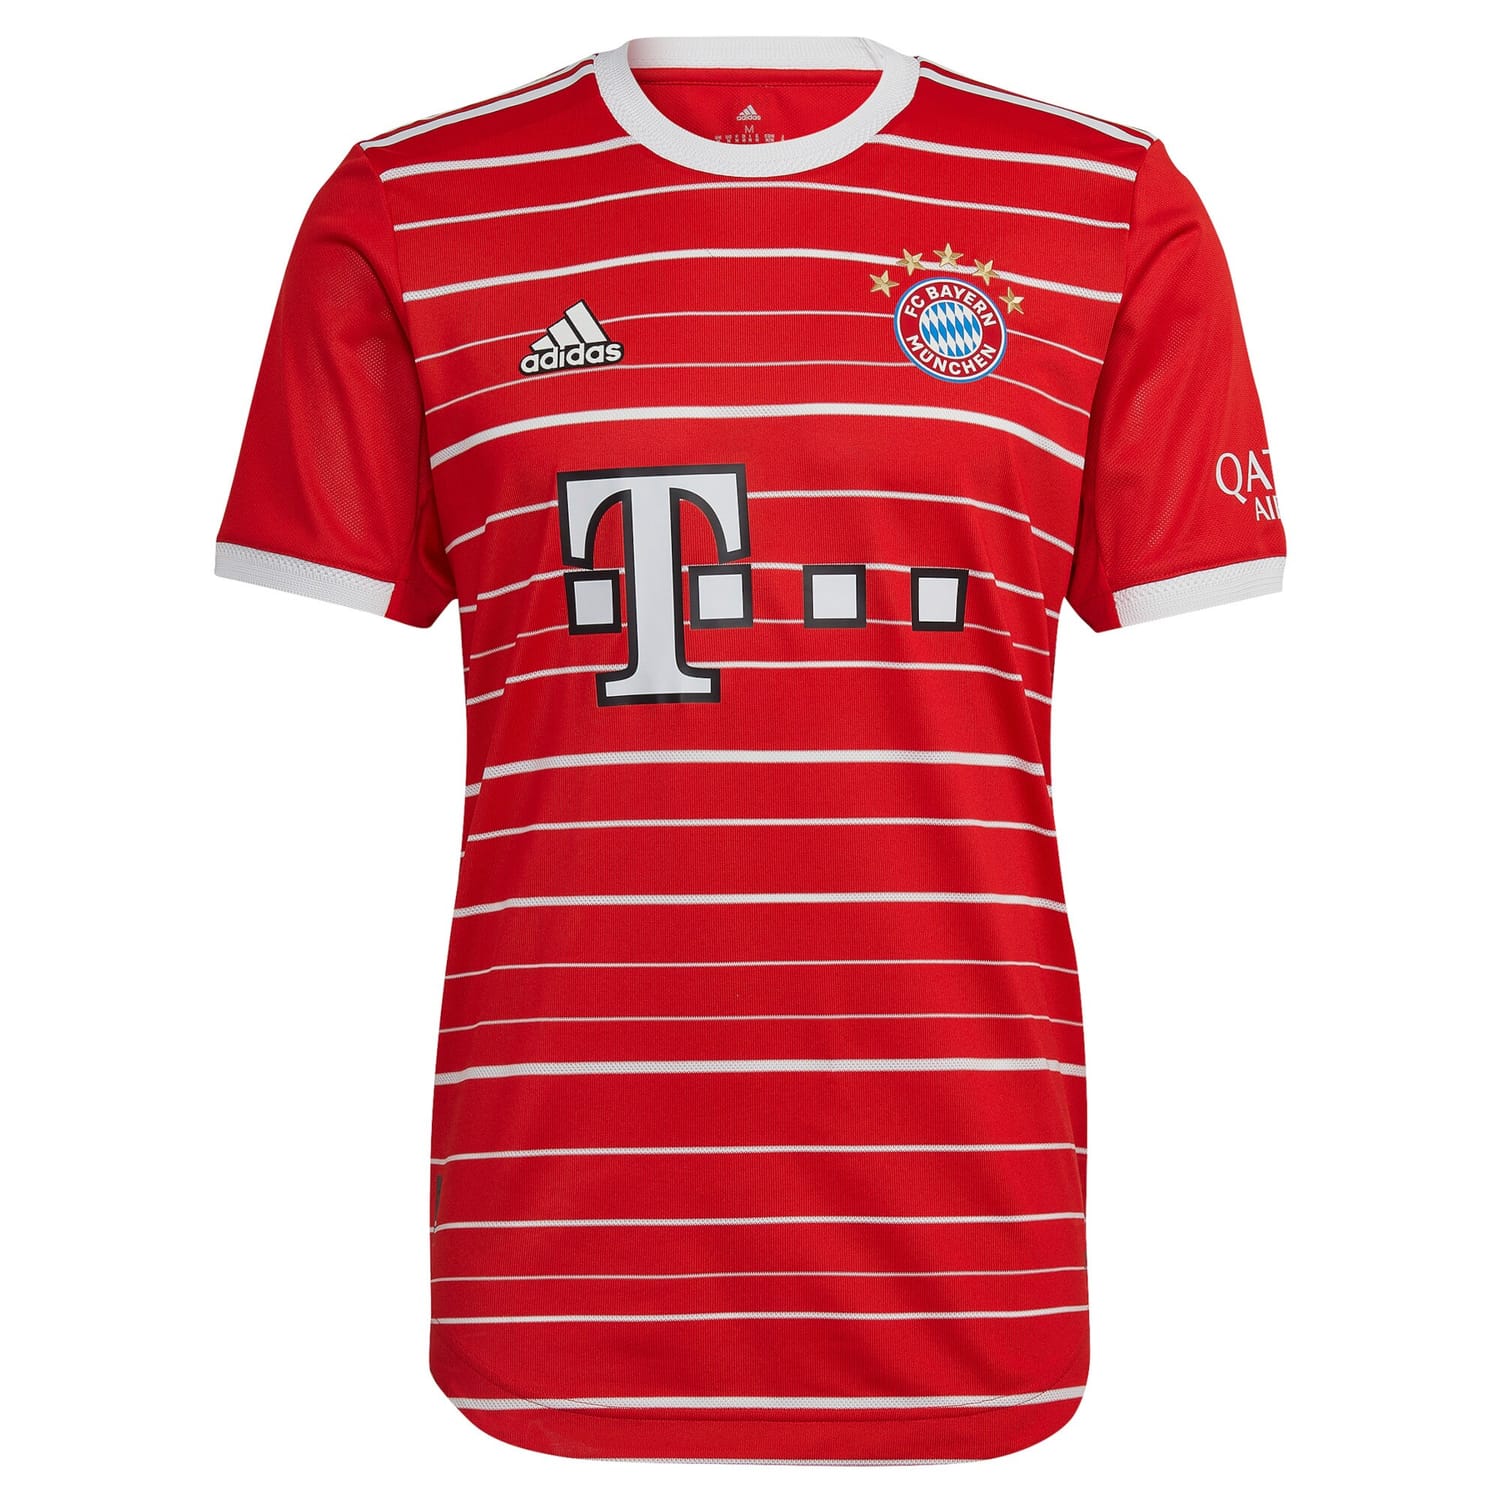 Bundesliga Bayern Munich Home Authentic Jersey Shirt 2022-23 player Pavard 5 printing for Men